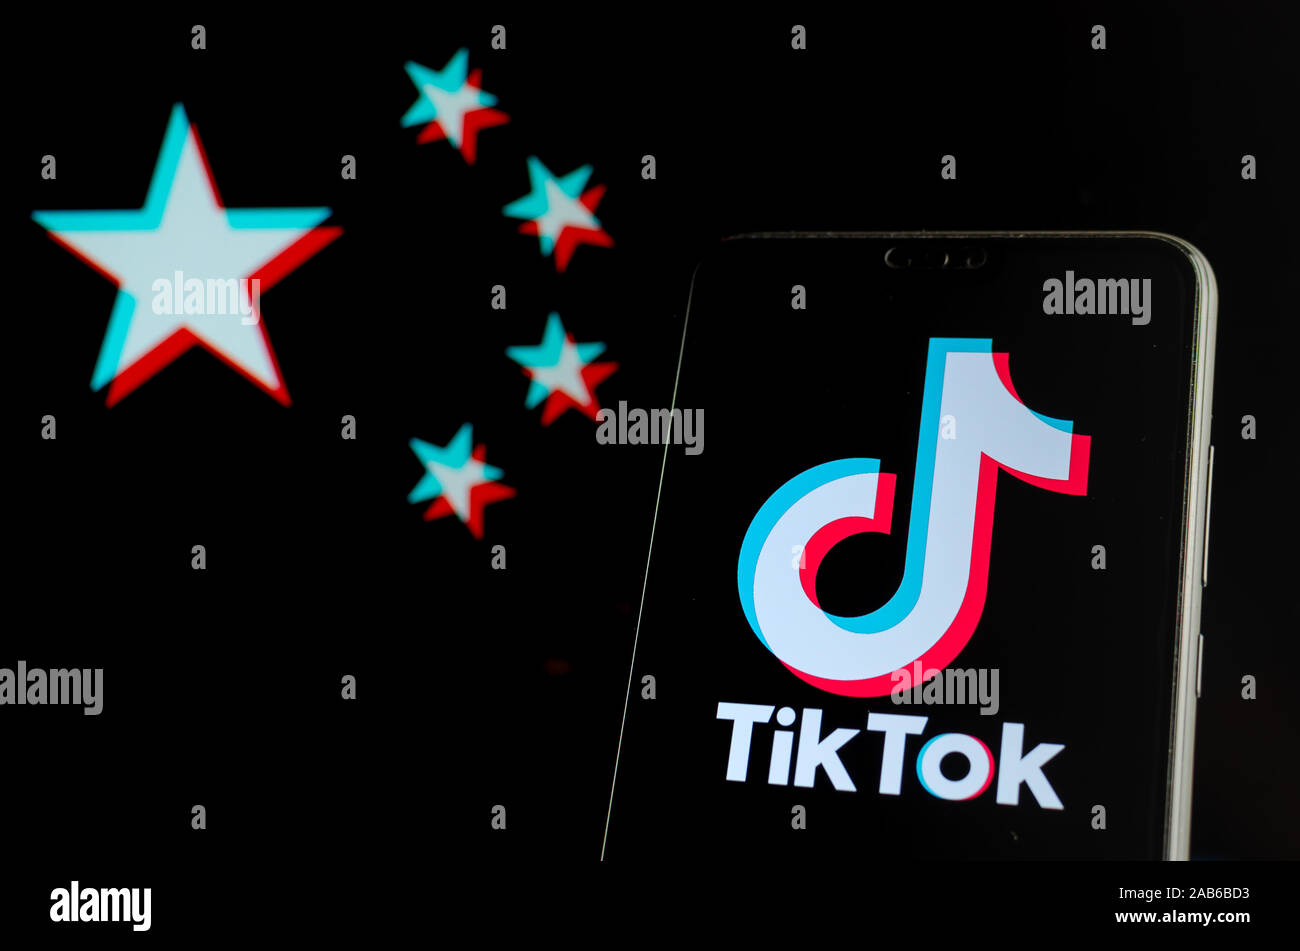 Tiktok logo hi-res stock photography and images - Alamy